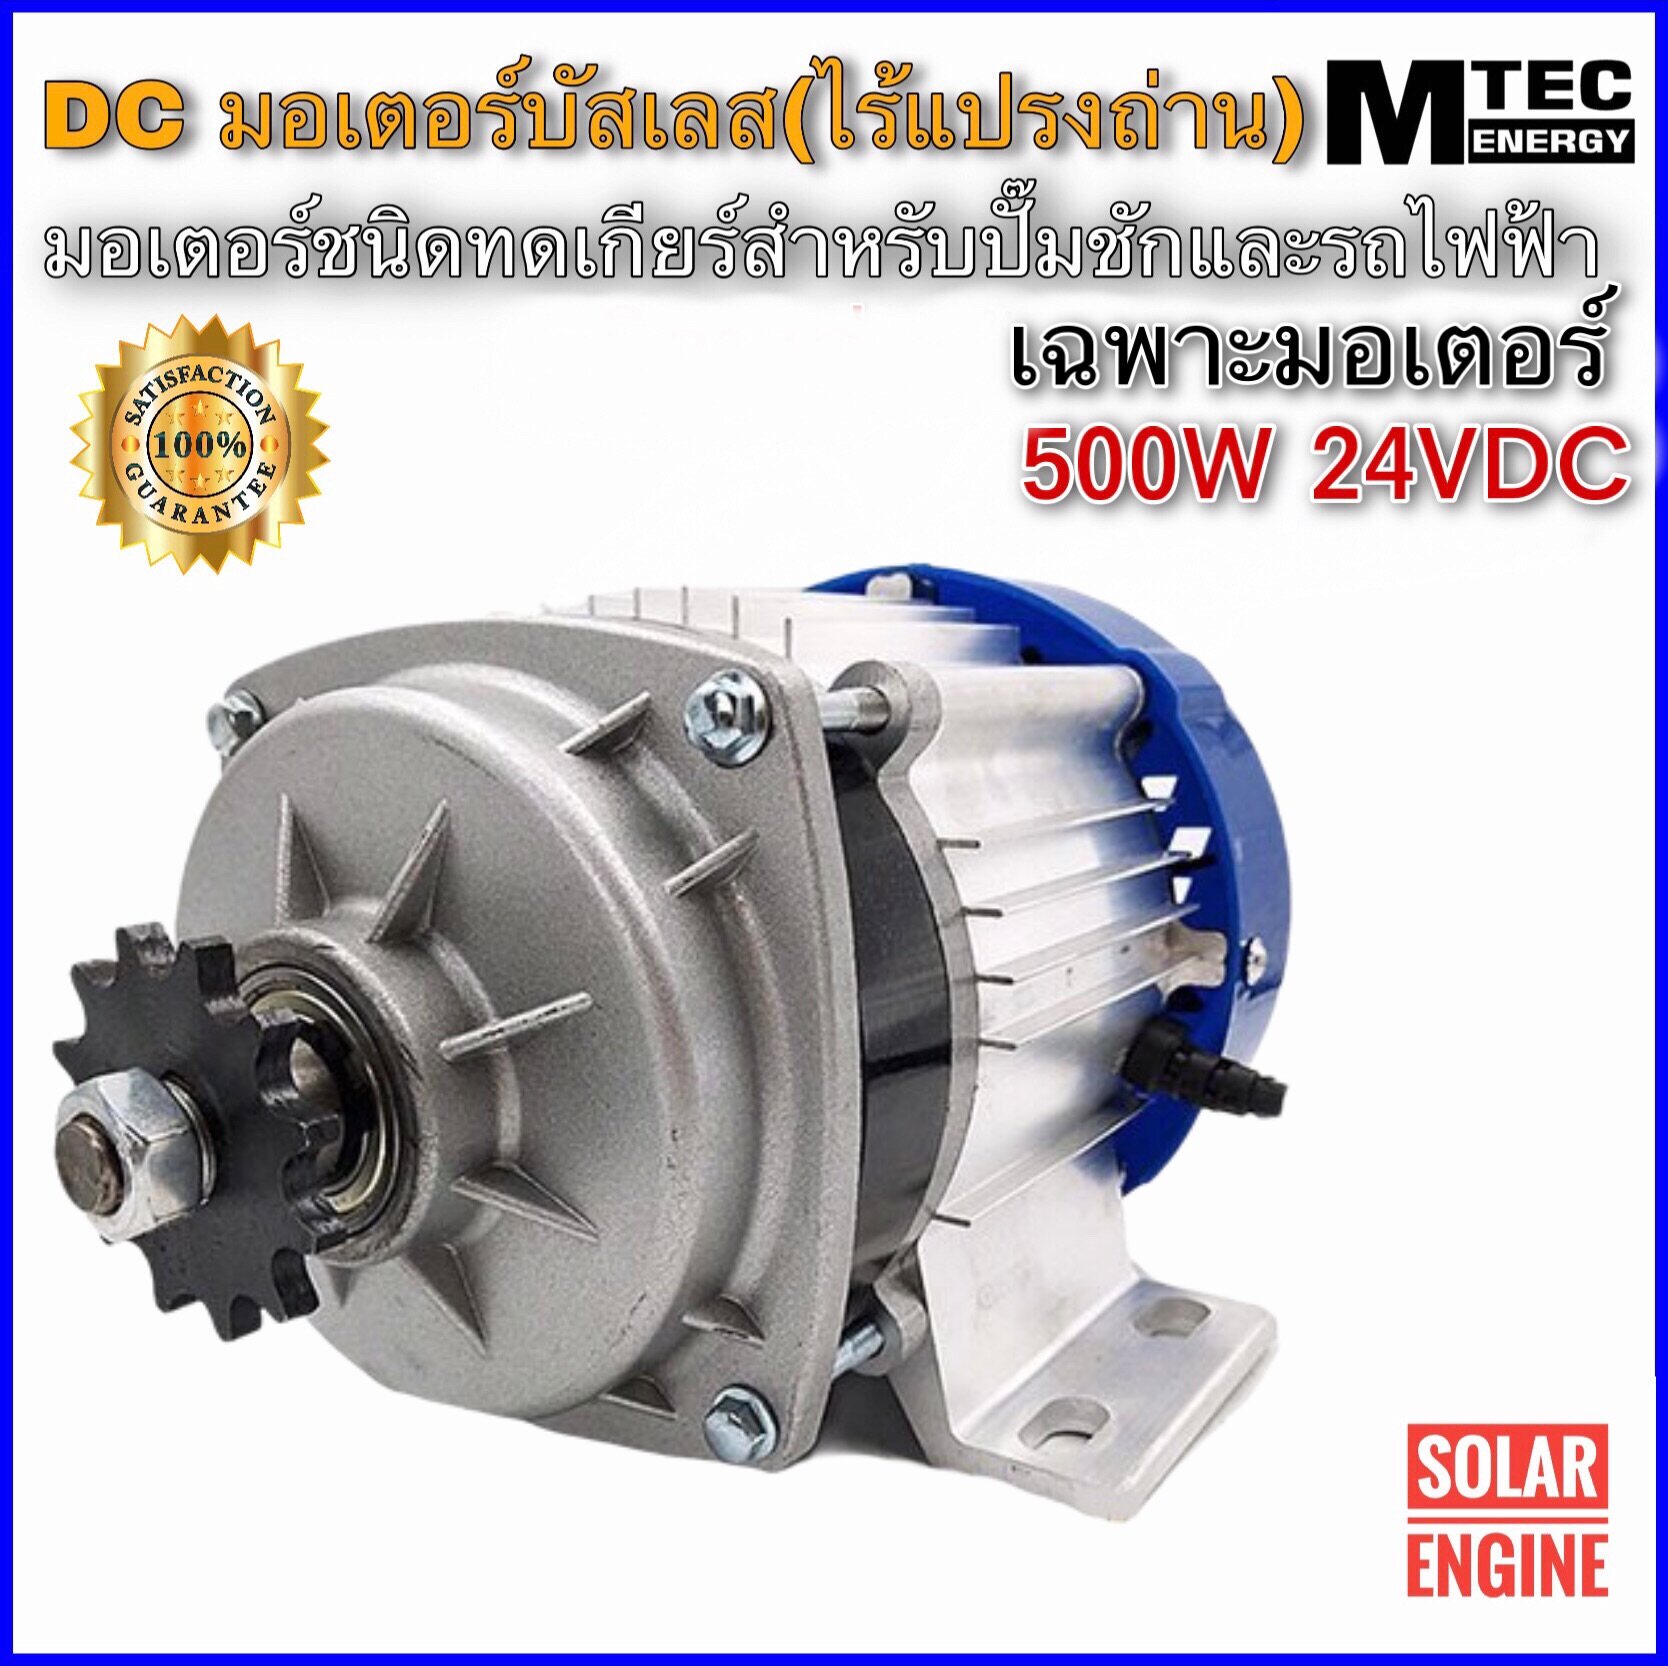 Mtec มอเตอร์บัสเลสเกียร์ทด DC24V 500W (BLDC) (เฉพาะมอเตอร์) DC Motor Brushless 